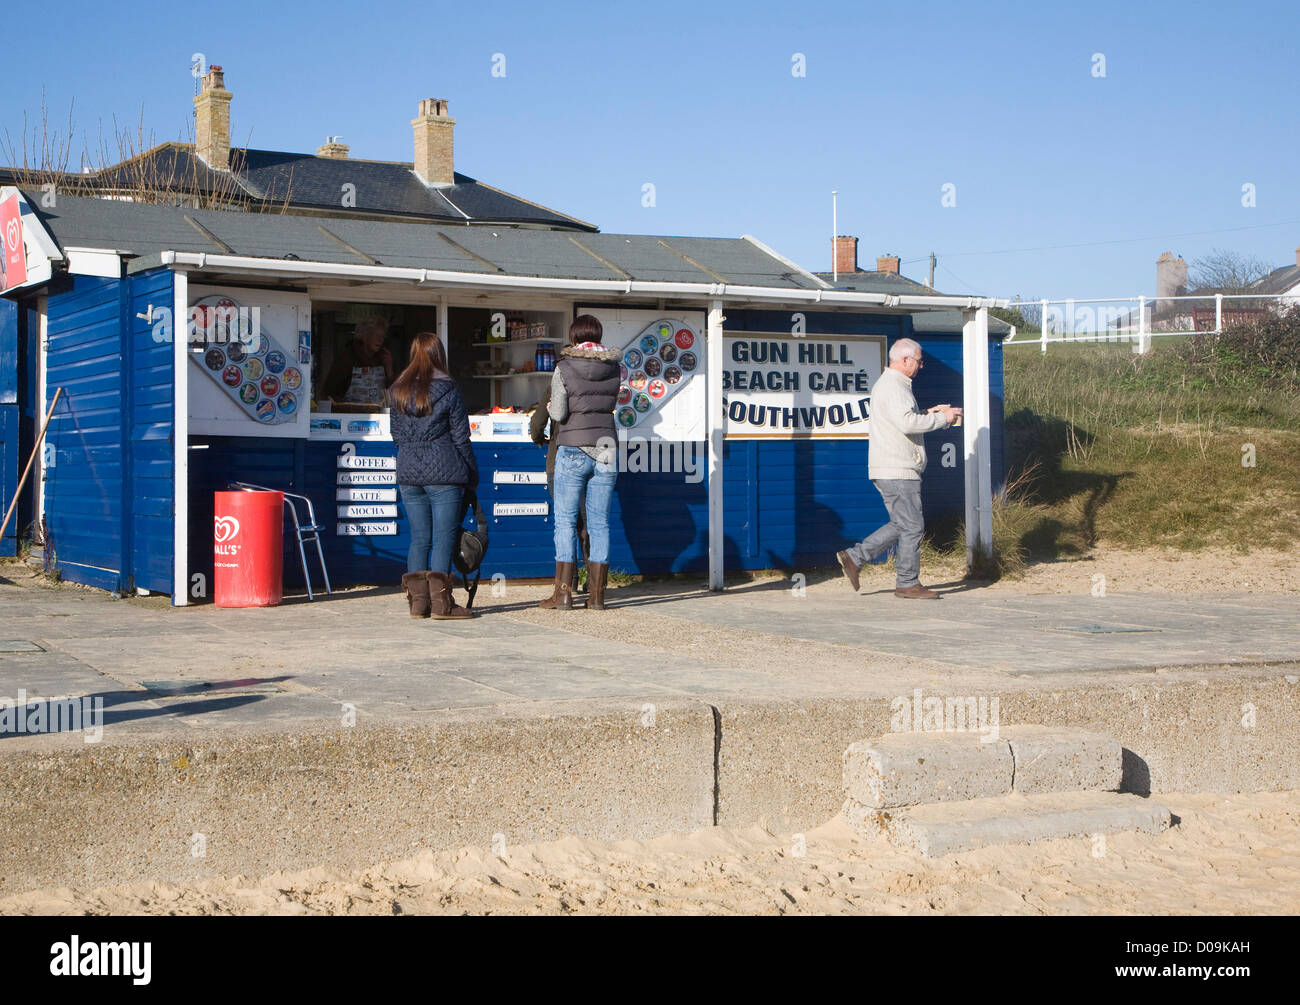 Gun Hill beach cafe Southwold, Suffolk, England Stock Photo